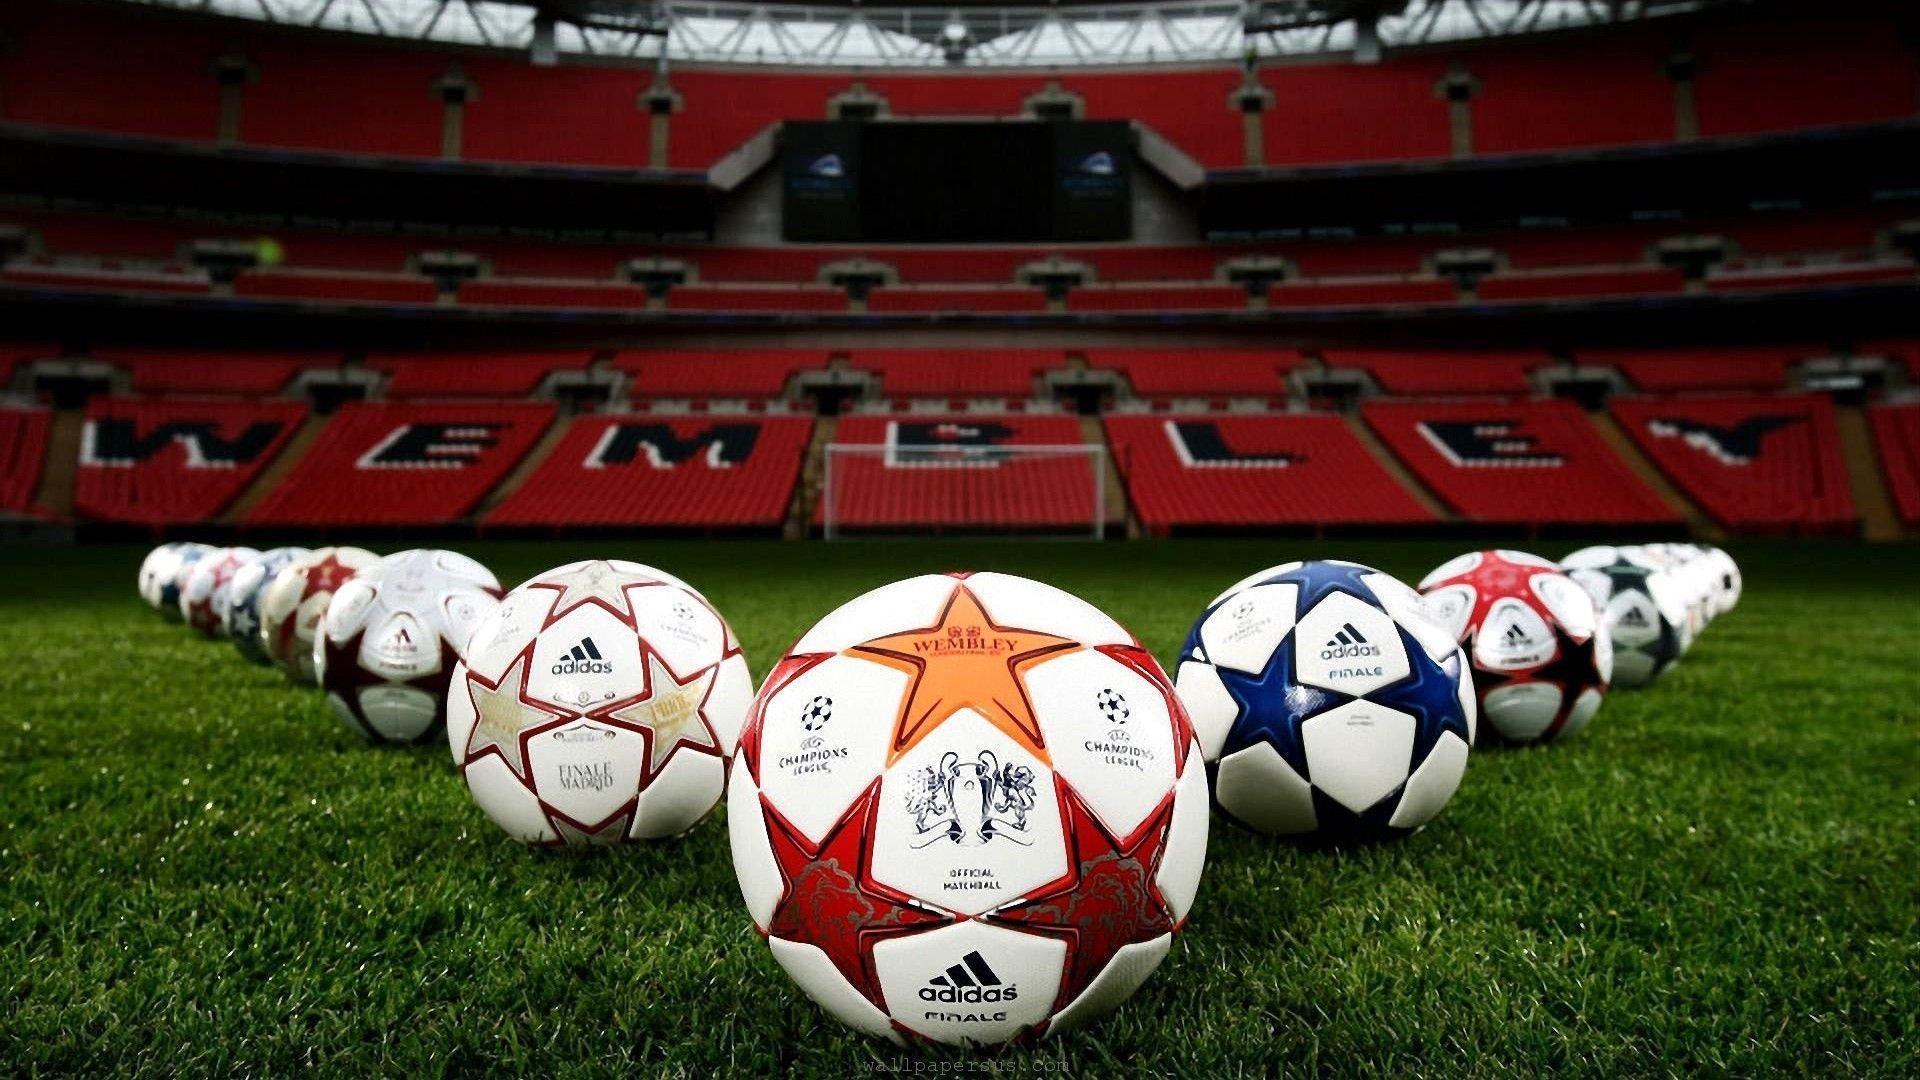 UEFA Champions League Ball (2013) HD Wallpaper